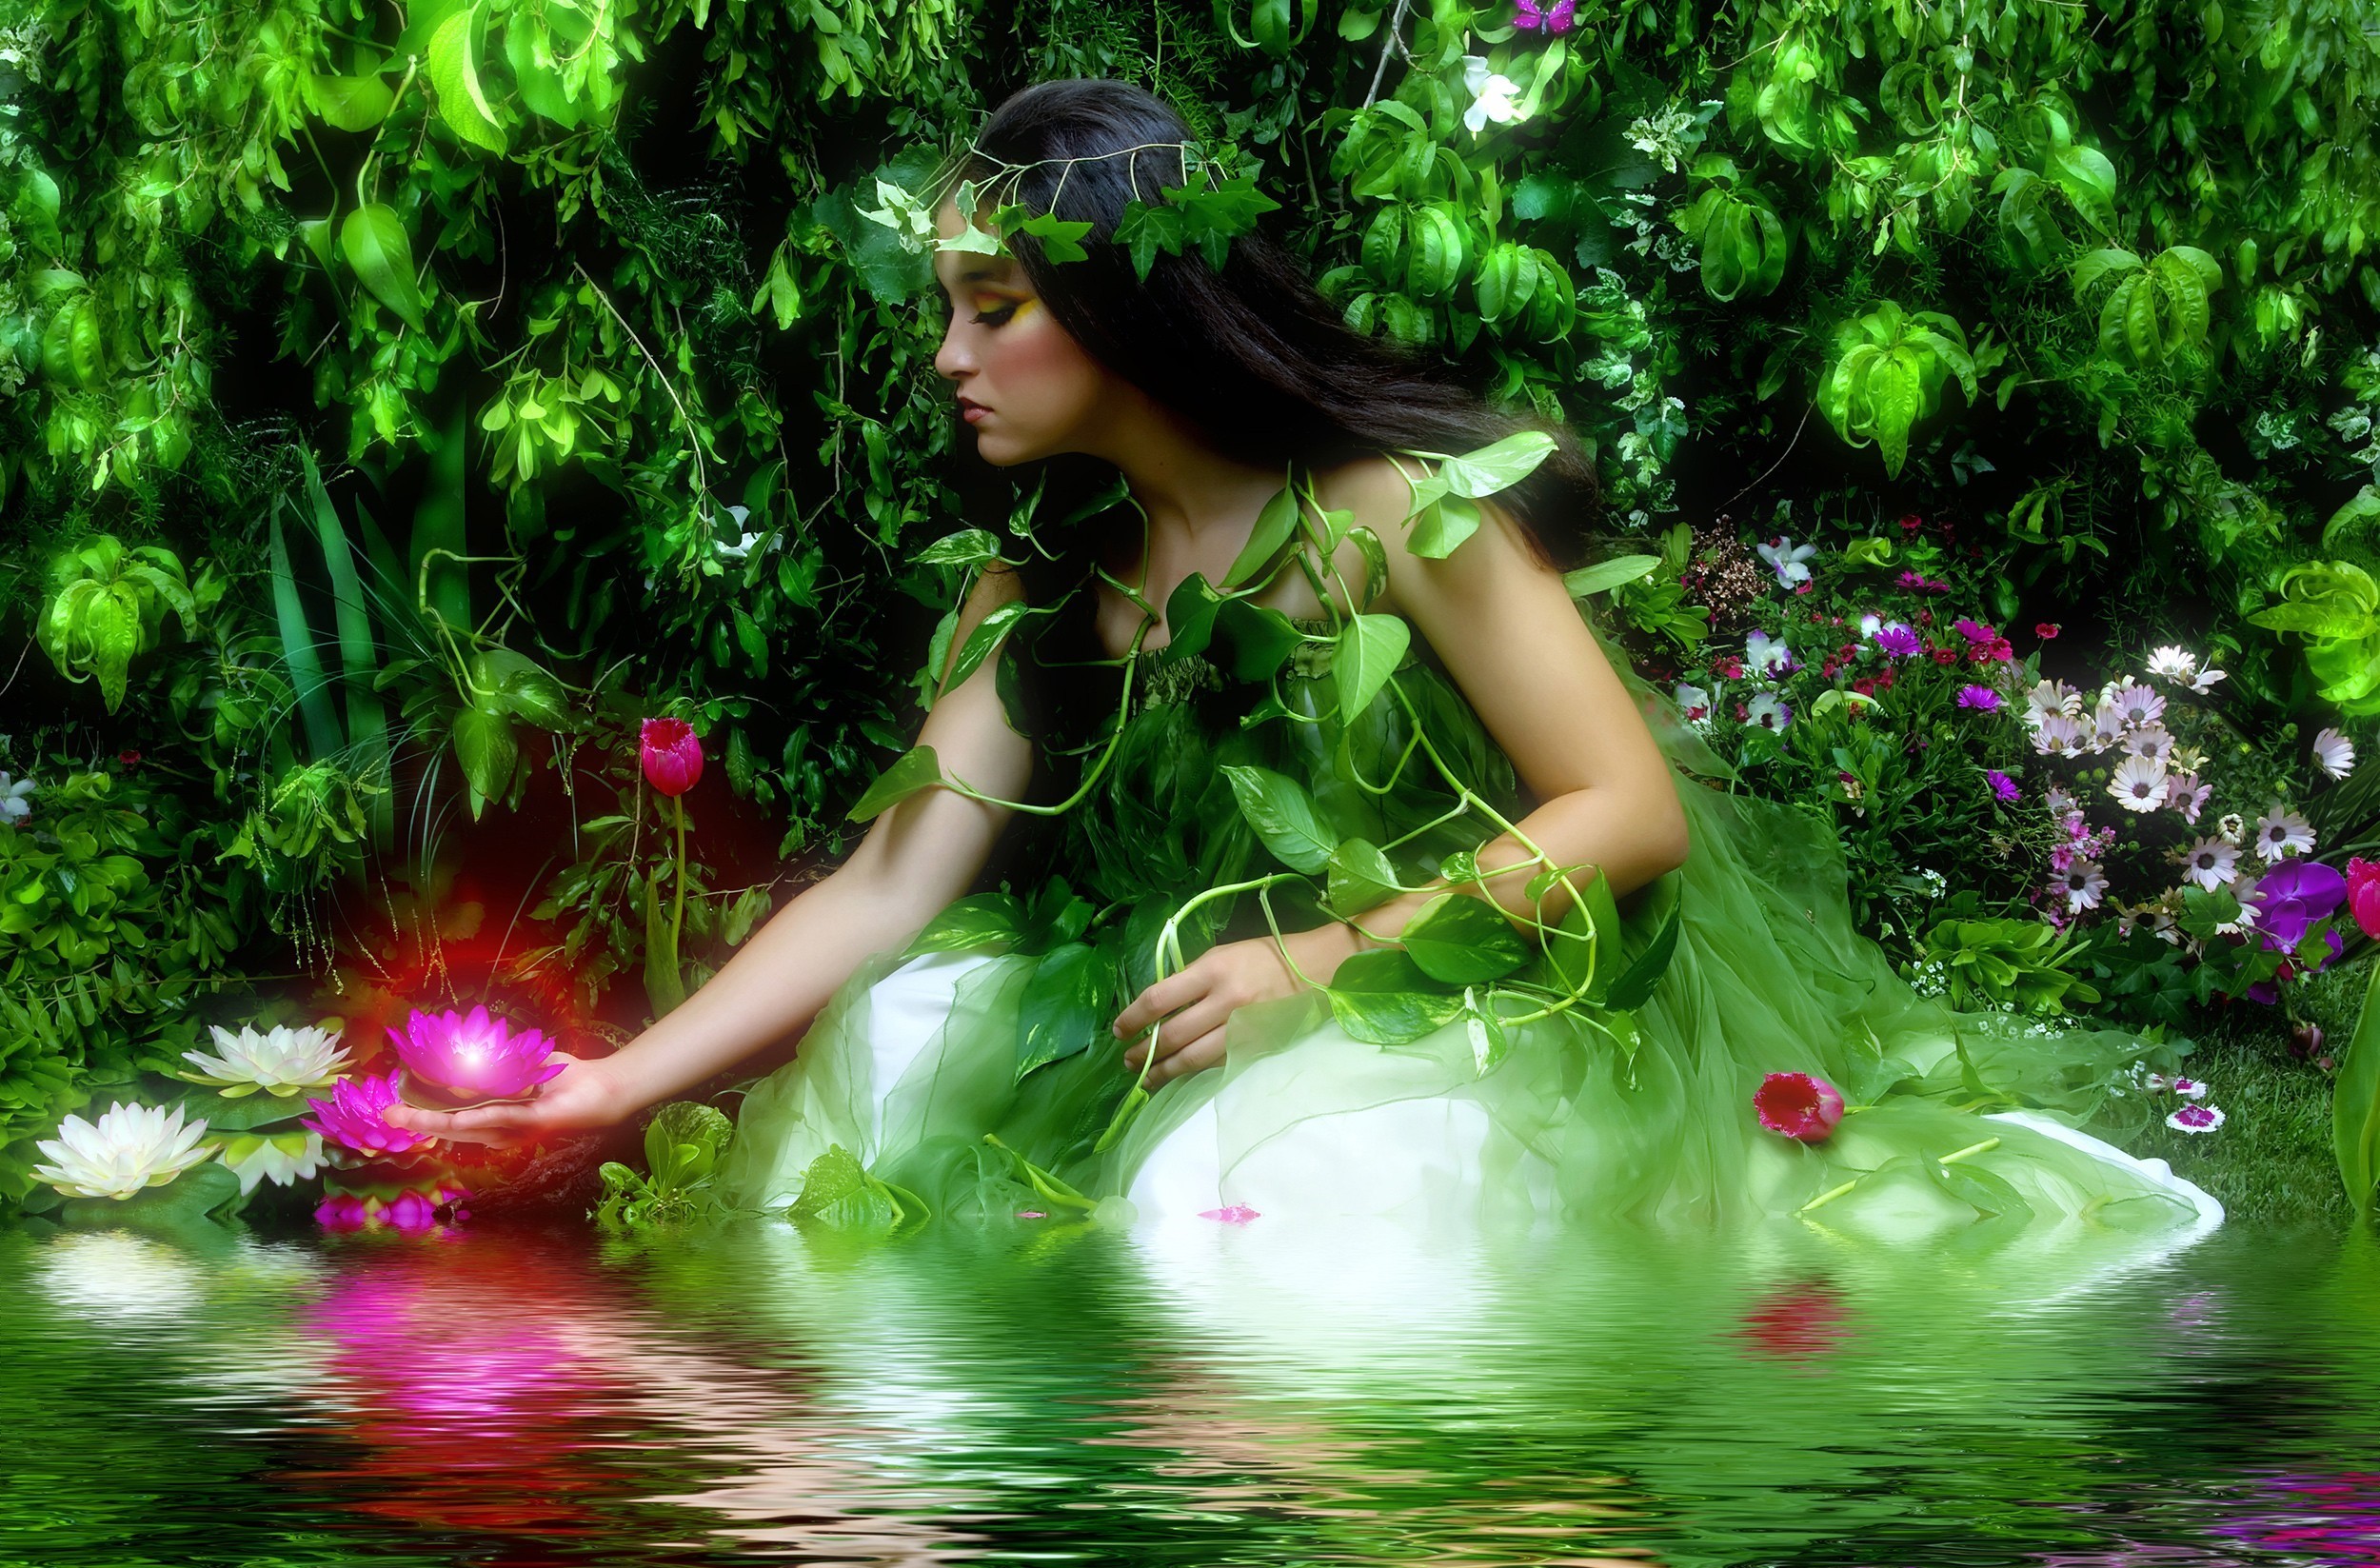 makeup, fairy, fantasy, brunette, flower, leaf, pond, spring, water lily lock screen backgrounds